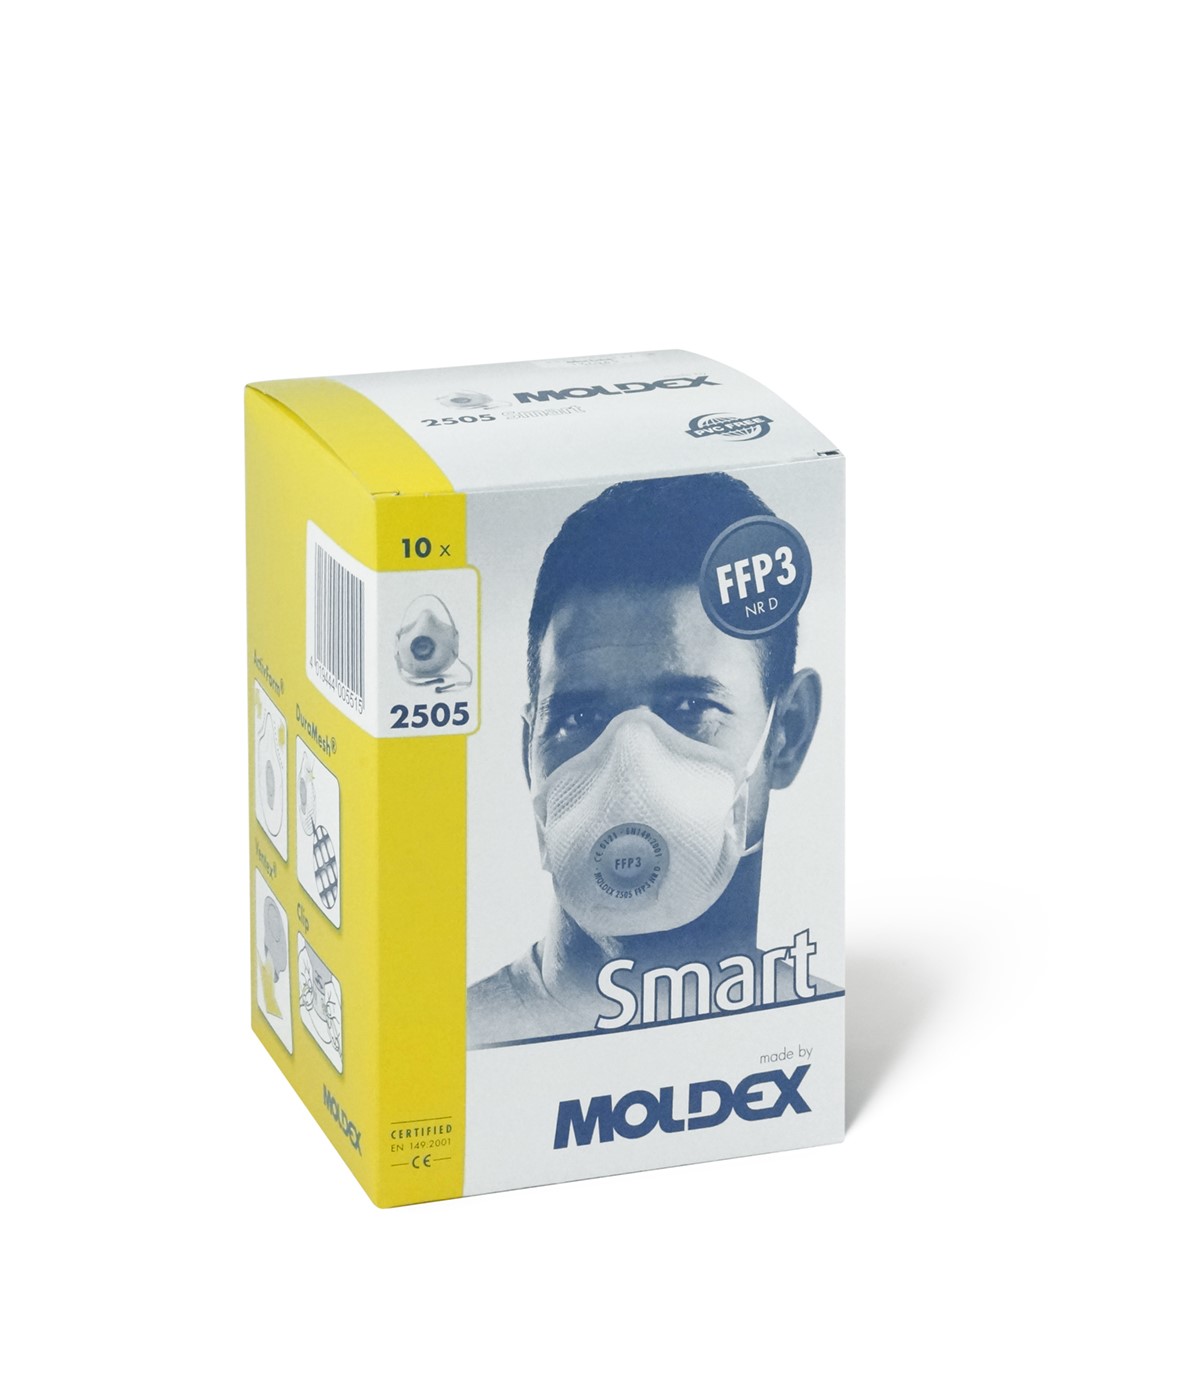 Moldex 2505 FFP3 Masks